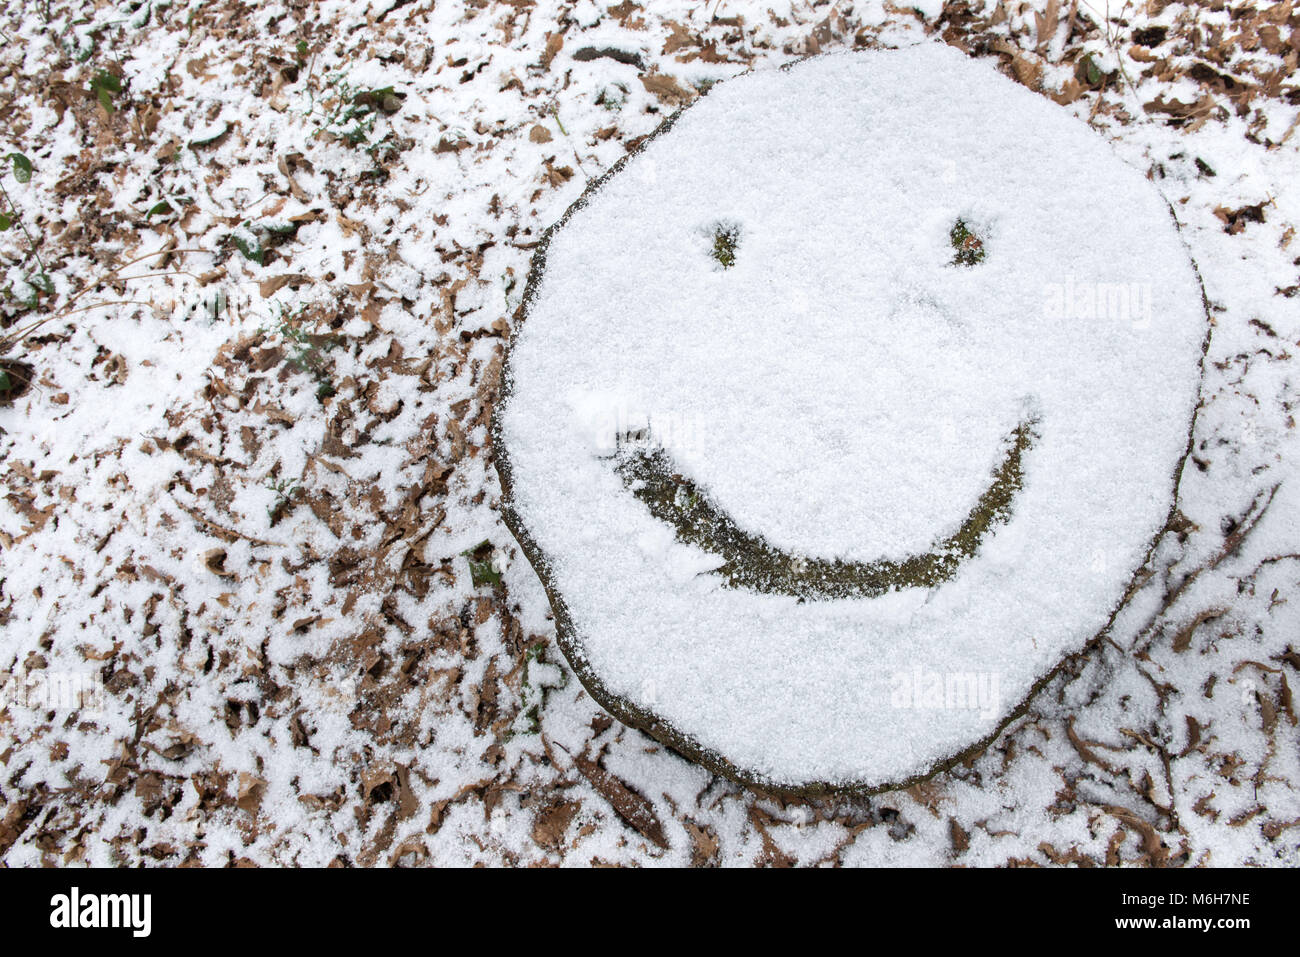 Smiley face emoji drawn on snow covered tree stump Stock Photo